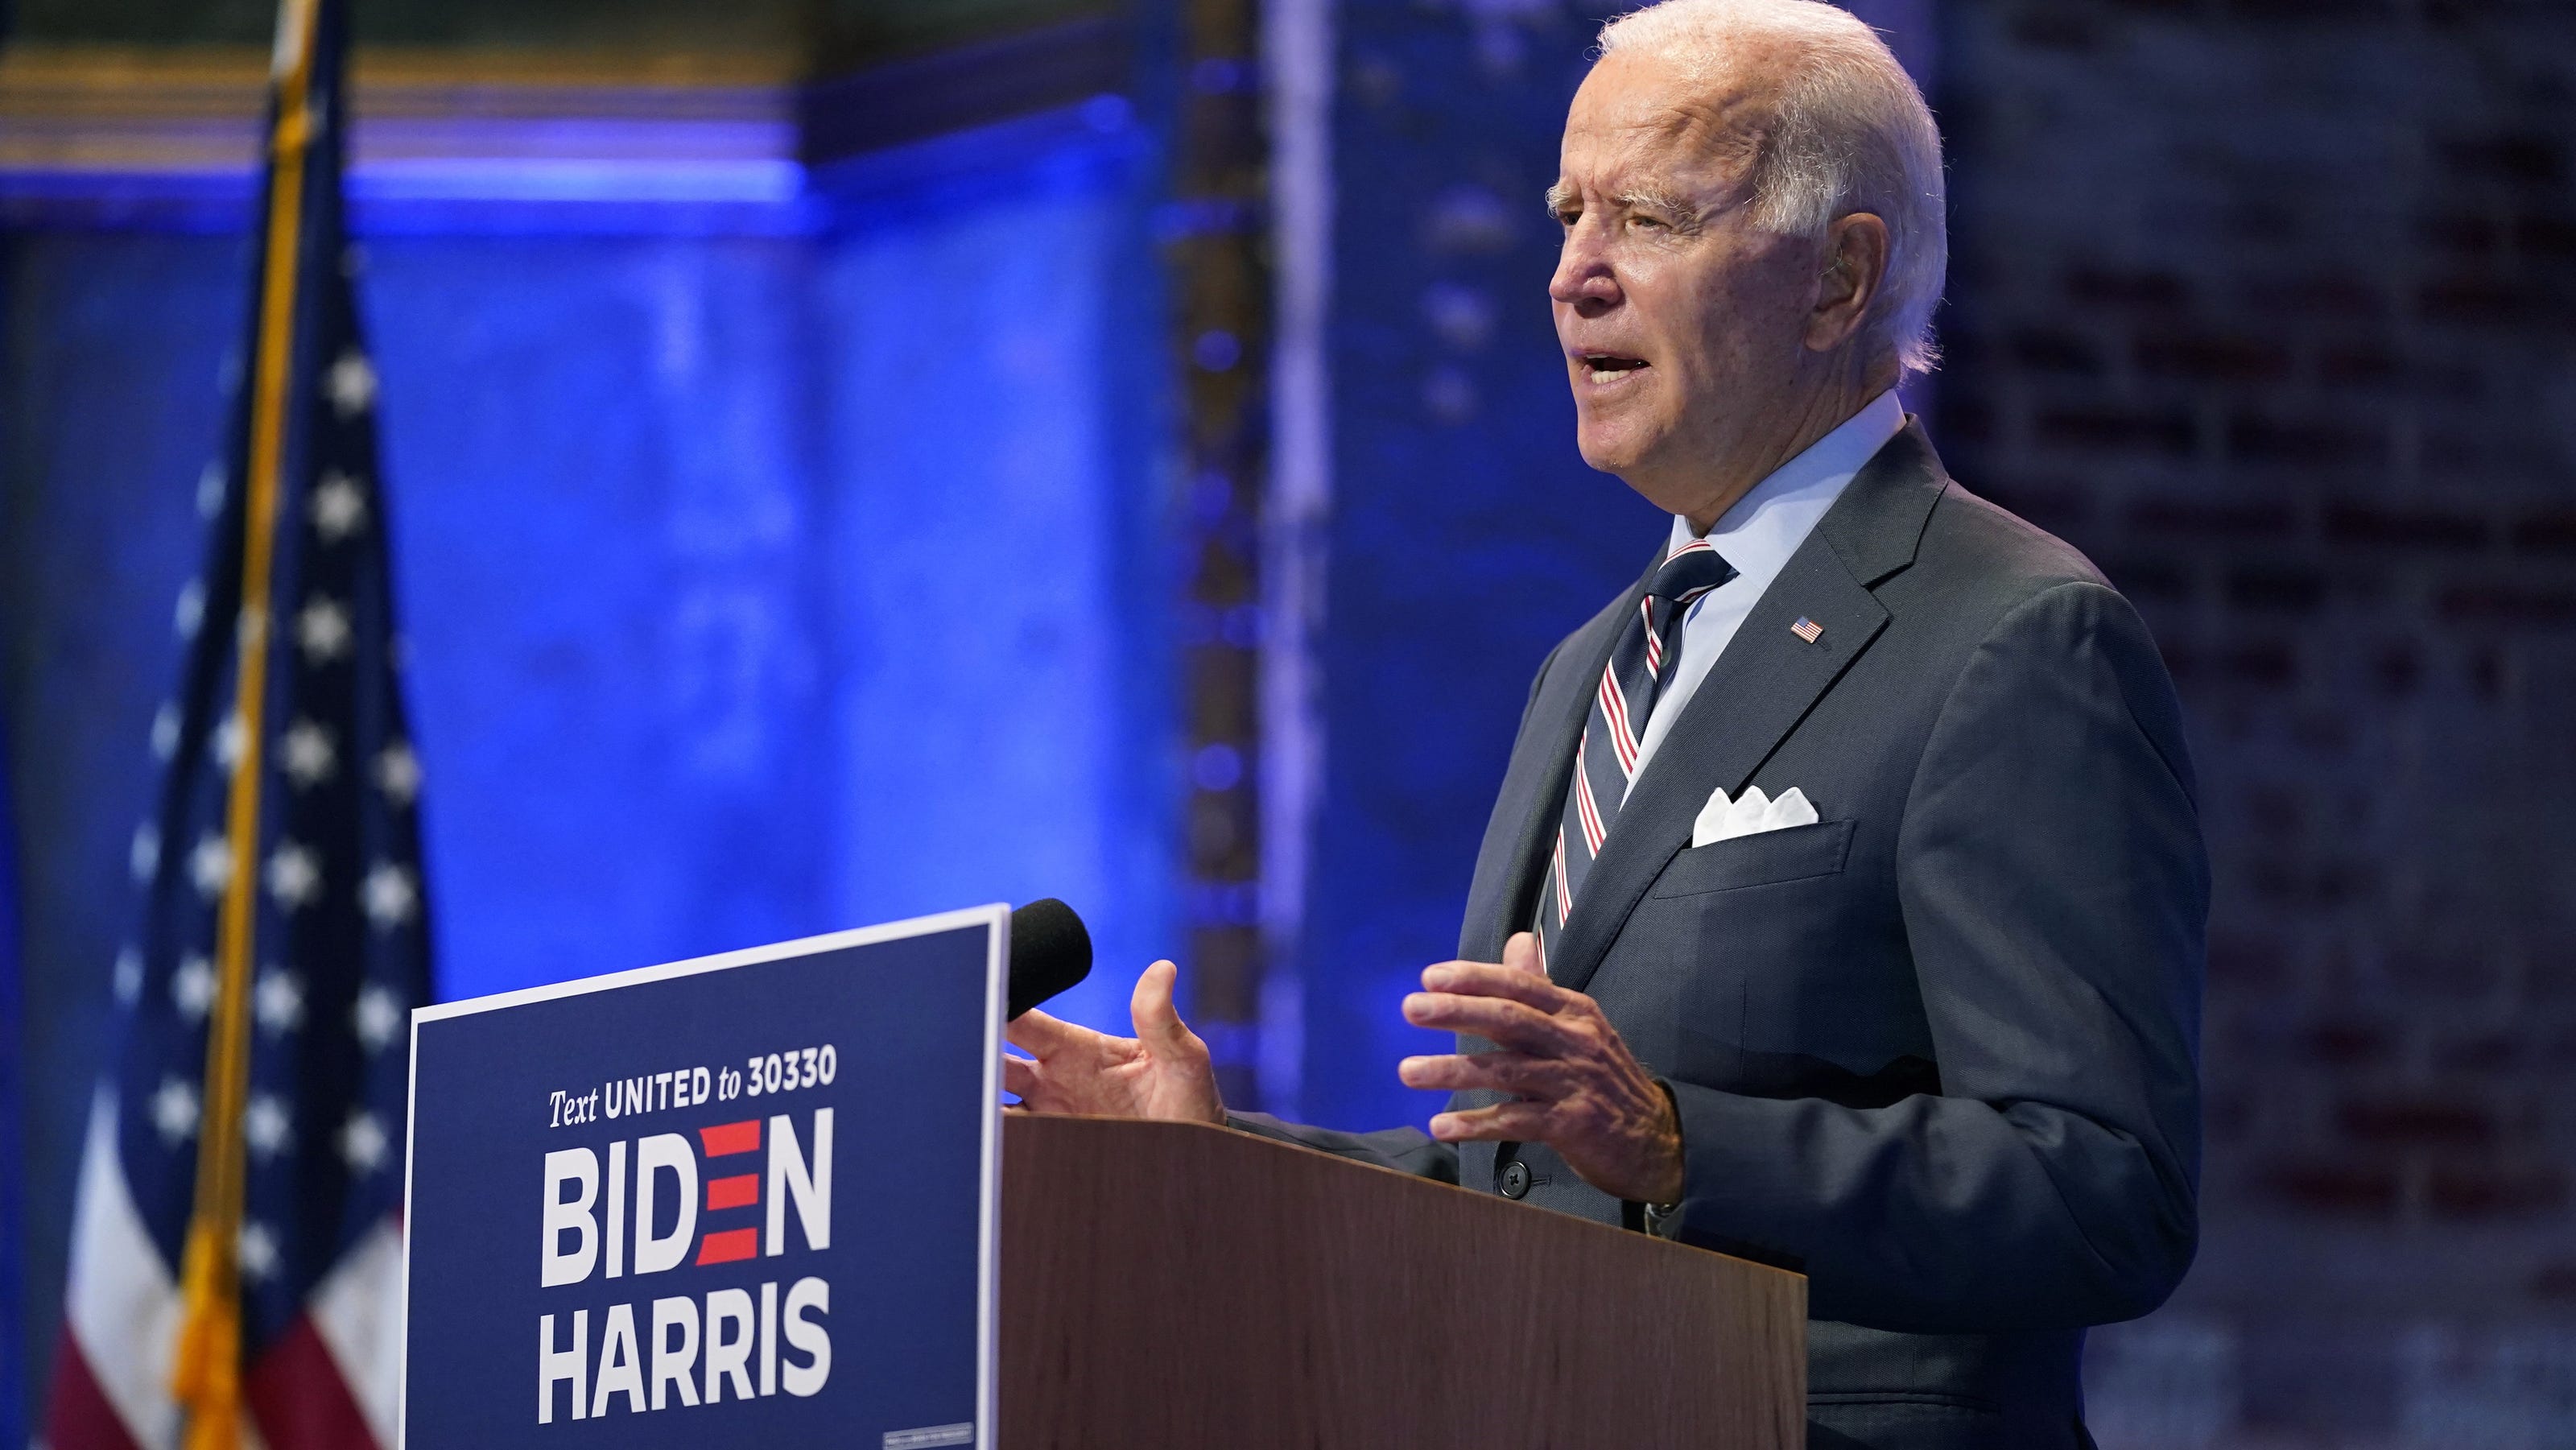 Election 2020: Joe Biden for president - Palm Beach Post endorsement